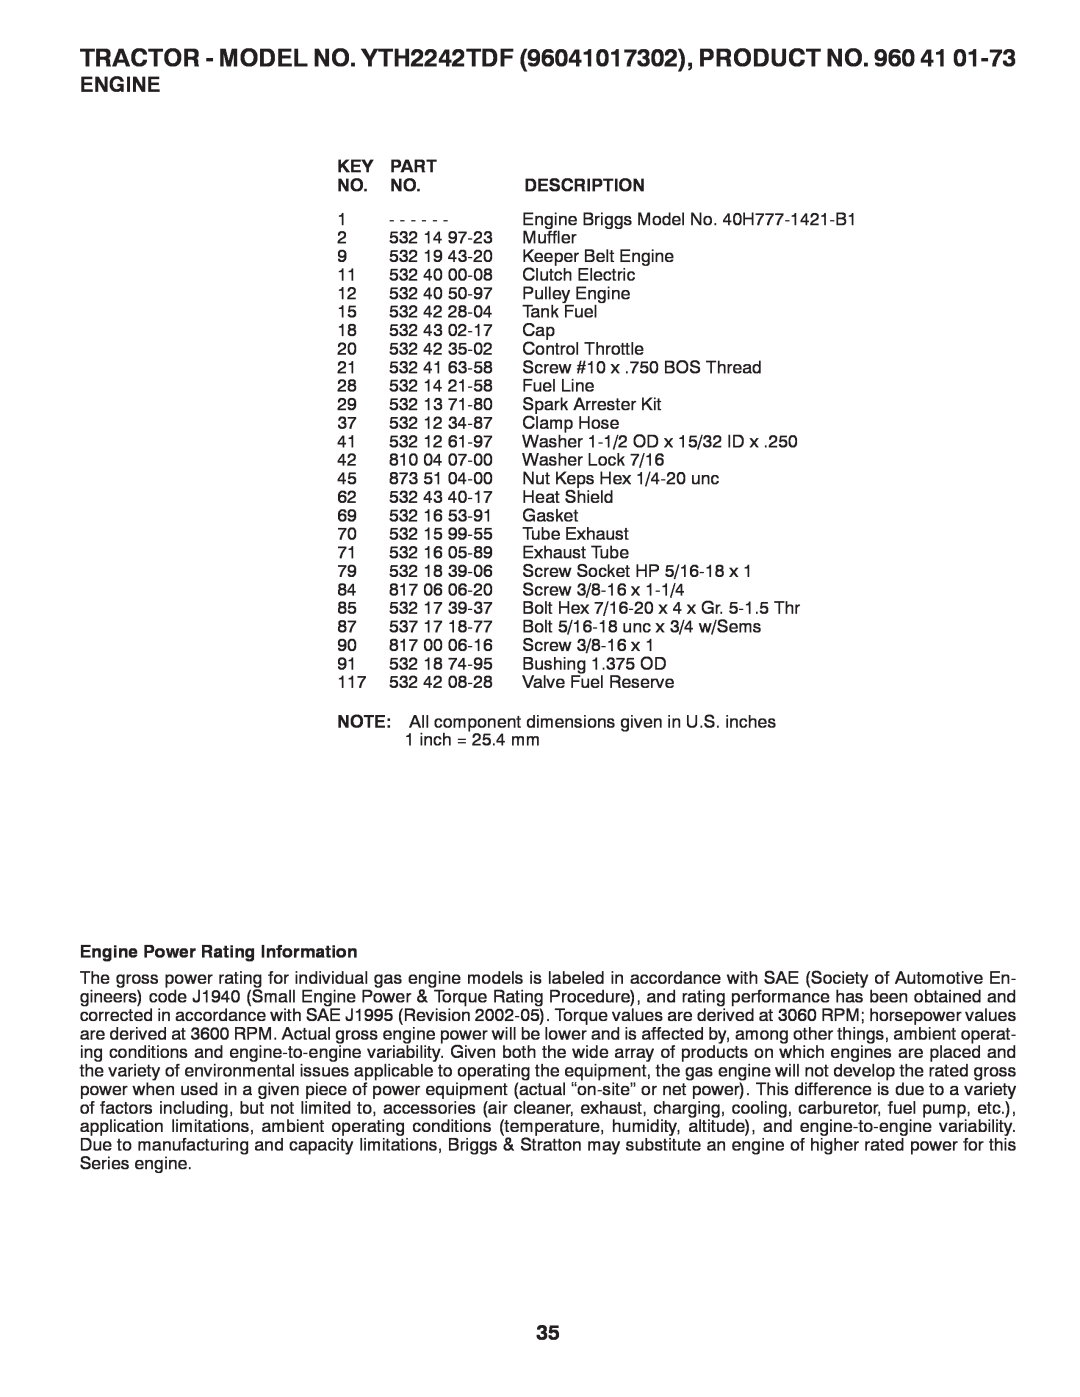 Husqvarna YTH2242TDF owner manual Part, Description, Engine Power Rating Information 